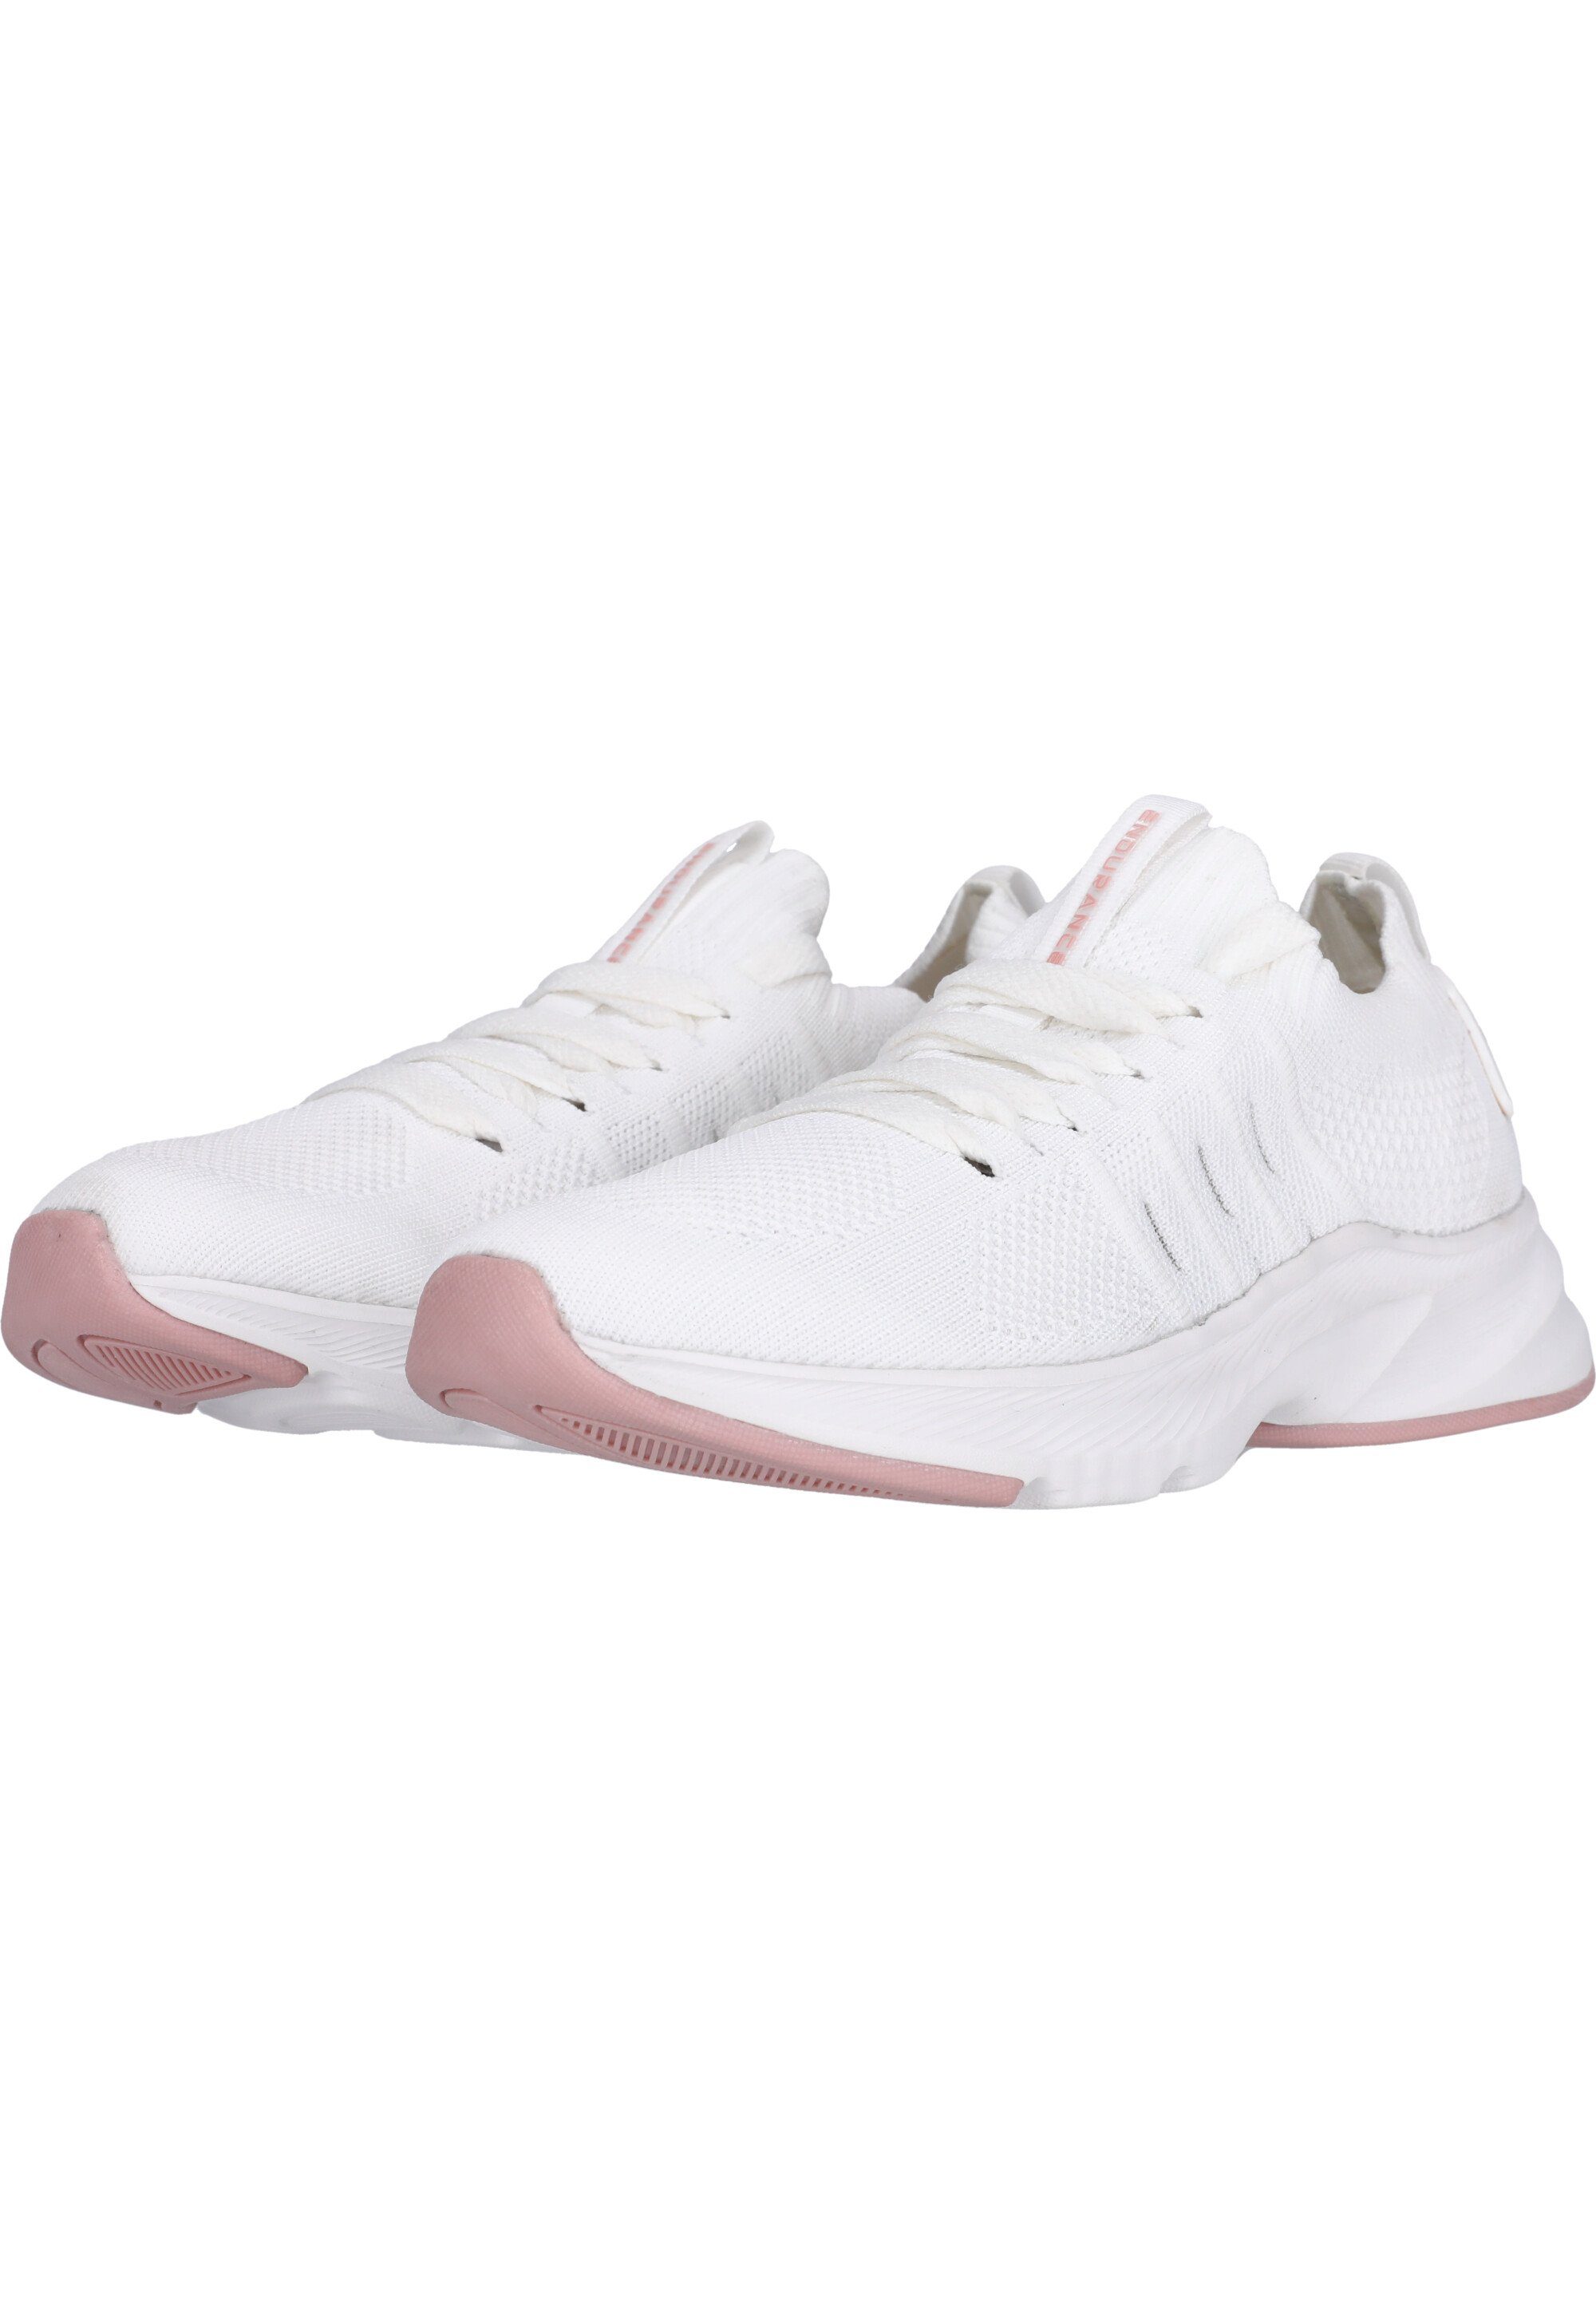 ENDURANCE Tervilla Sneaker weiß-rosa Light-Weight-Funktion mit